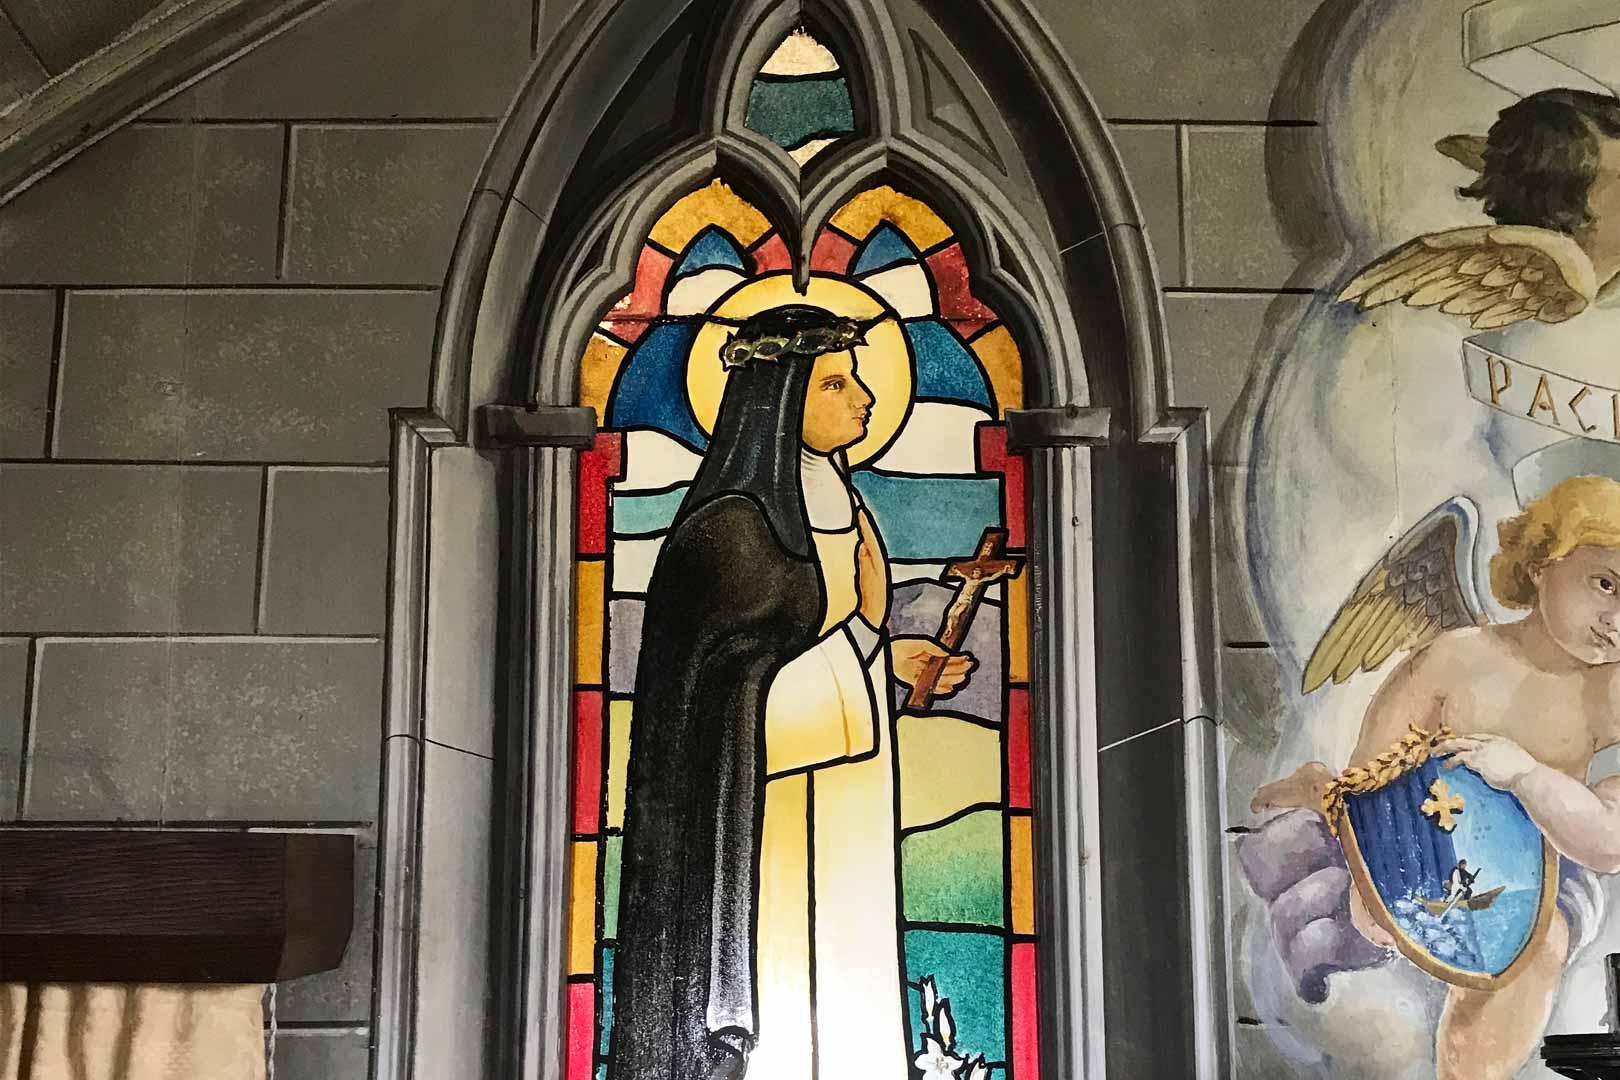 Painted glass window in the Italian Chapel.